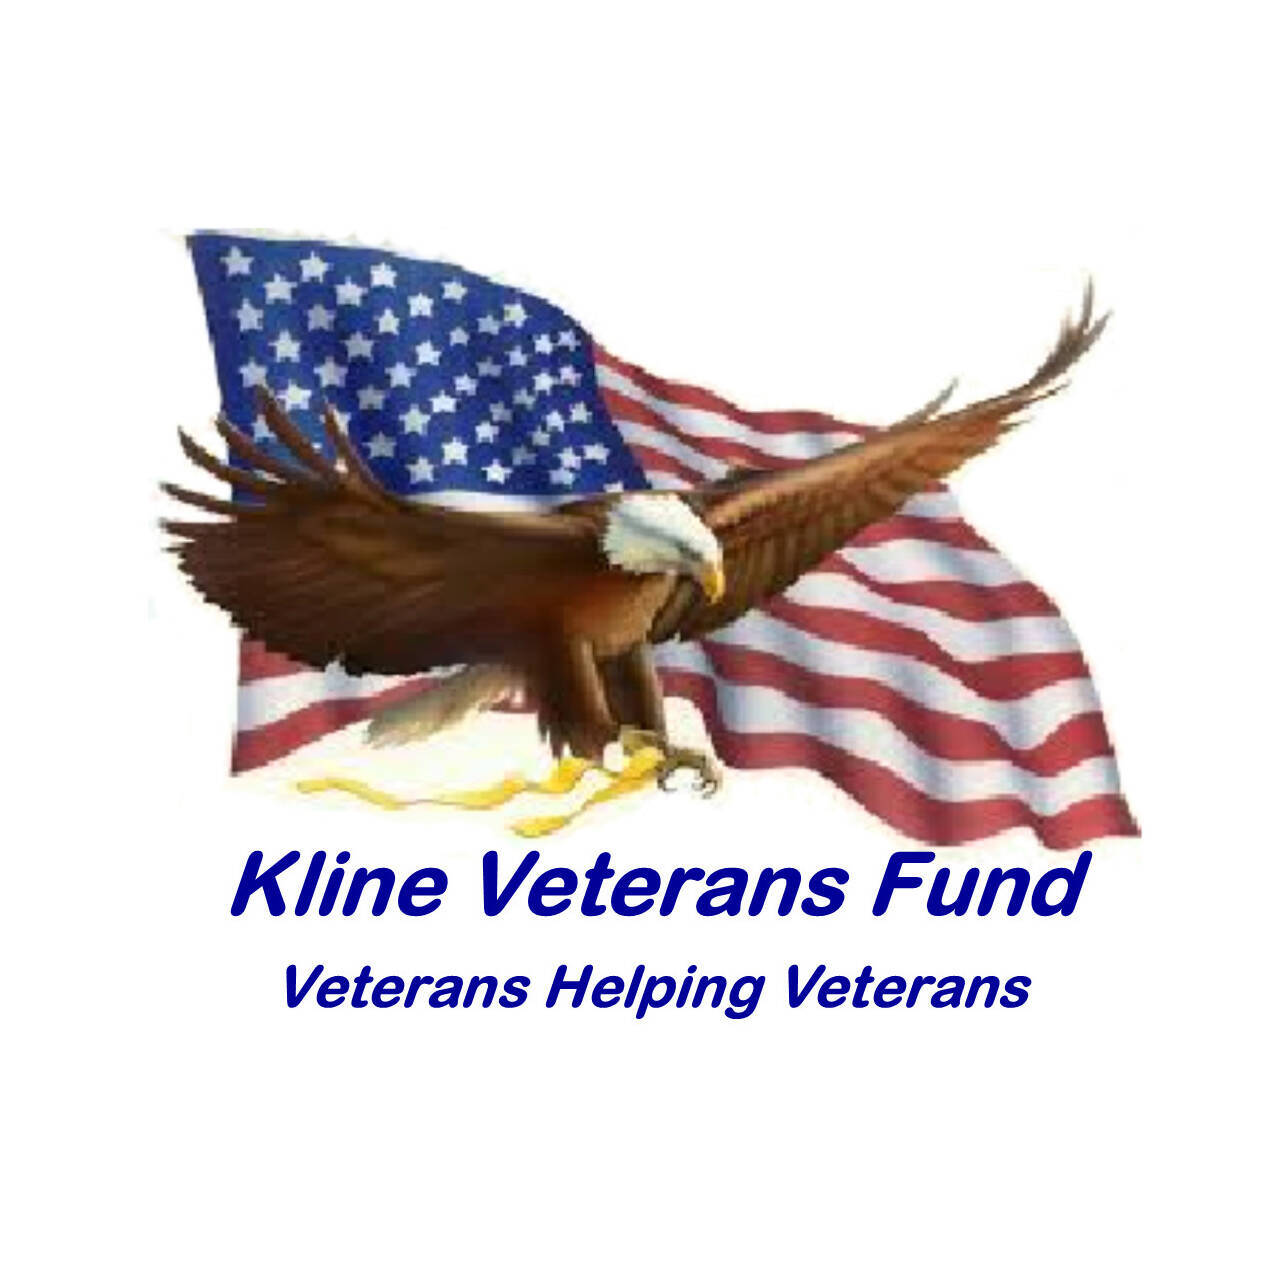 Edward Kline Memorial Homeless Veterans Fund, Inc.